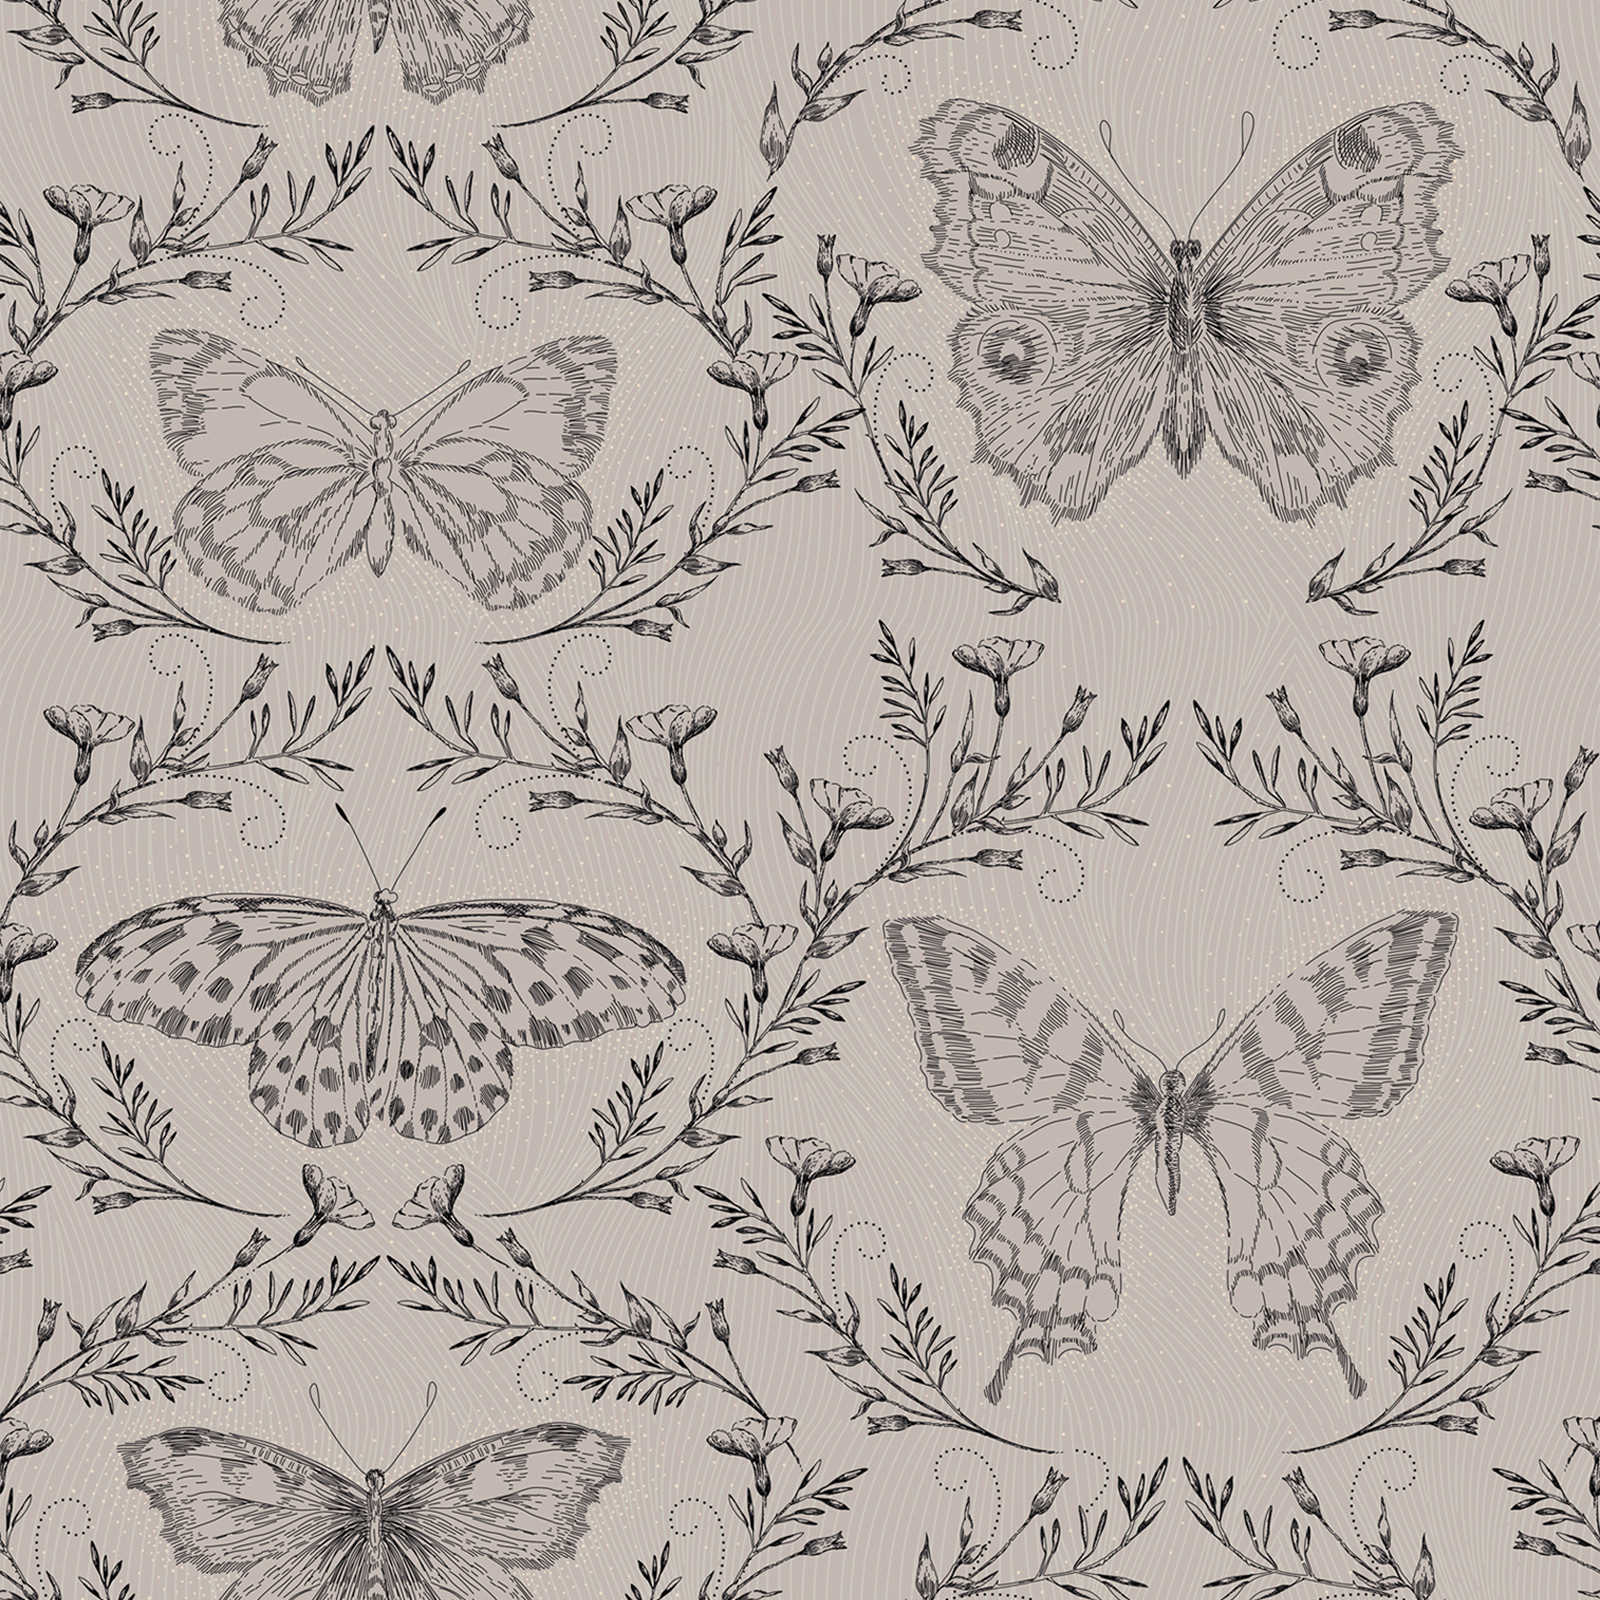 Butterfly wallpaper with vines in a dark design - grey, greige, black
